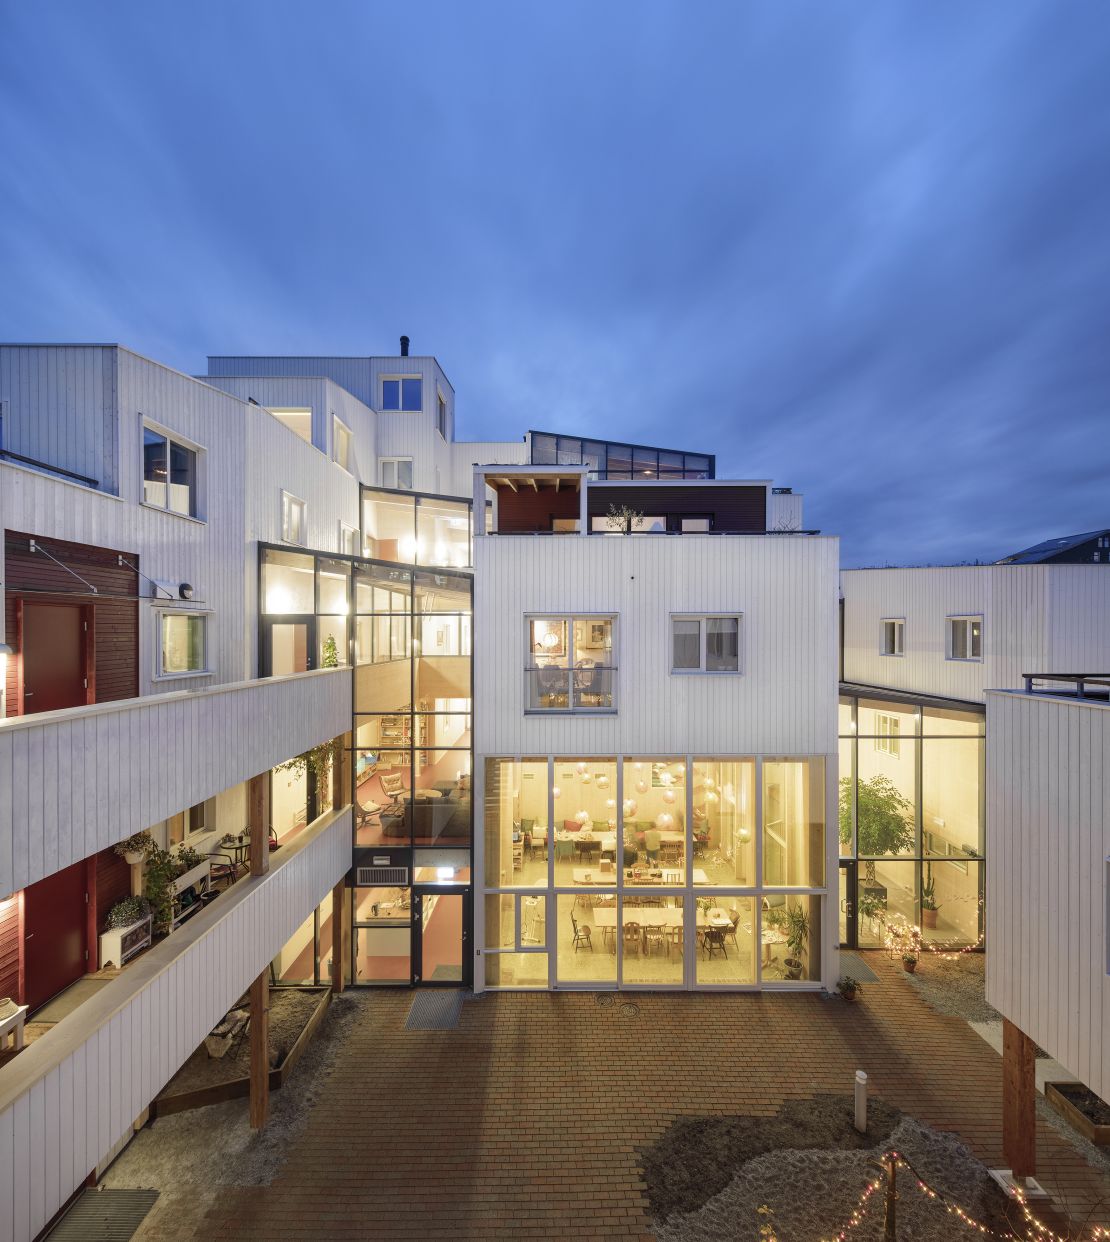 In addition to Vindmøllebakken, Helen & Hard have five other cohousing projects in the works.